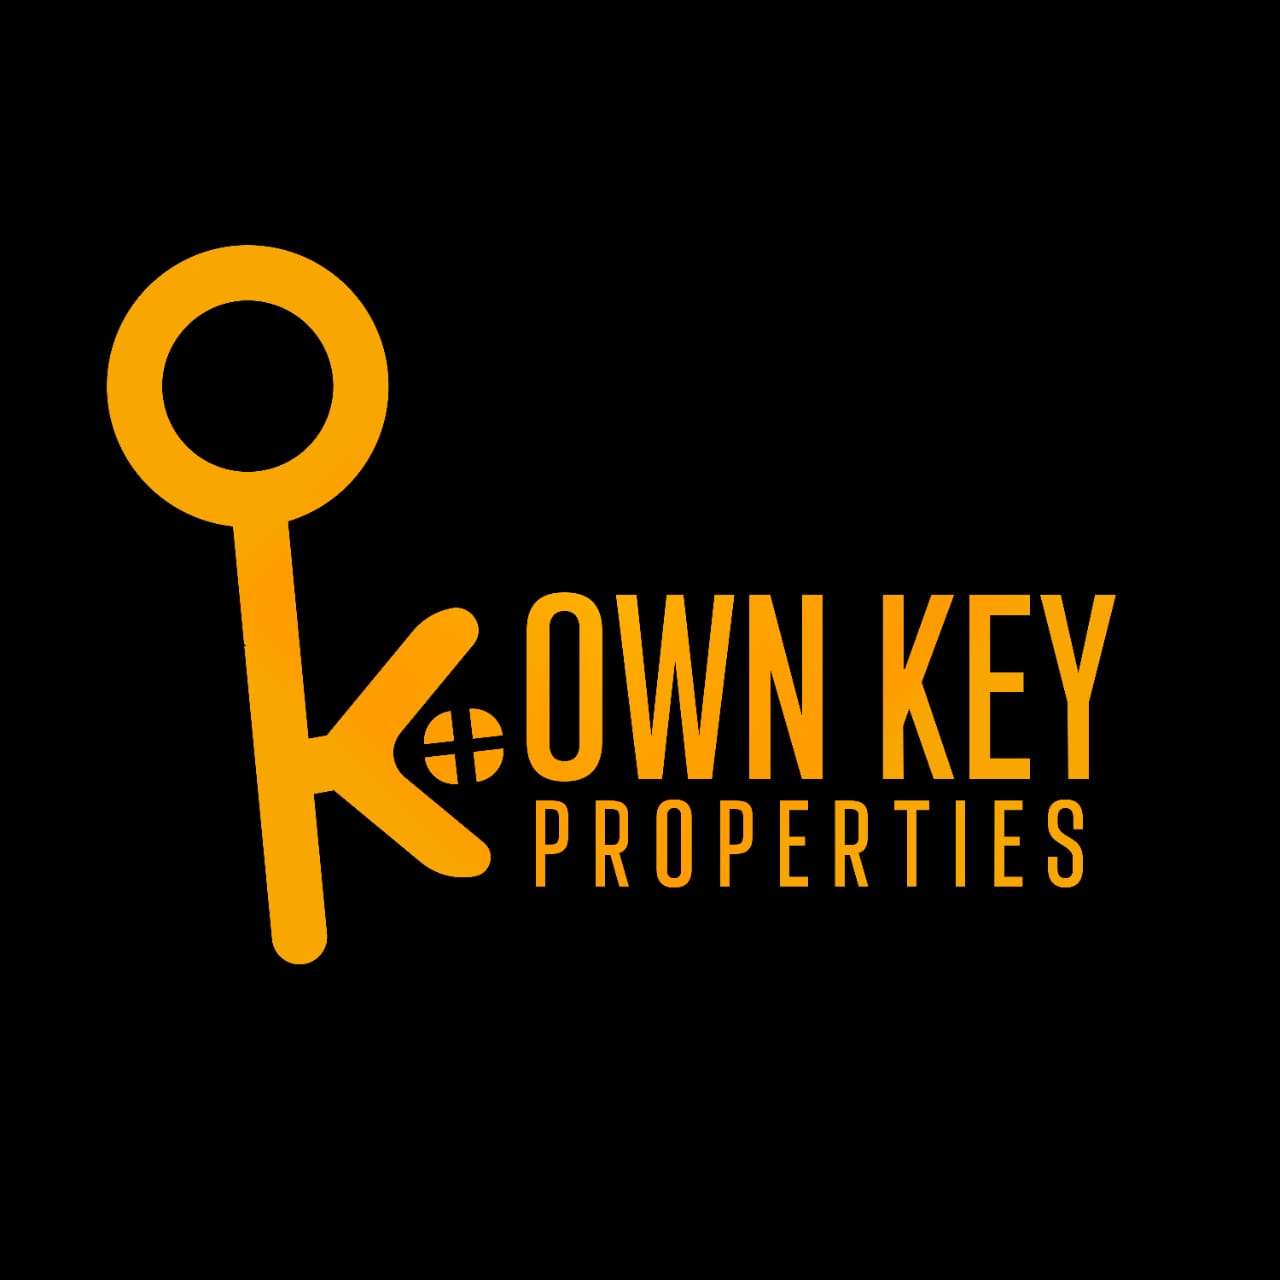 Own Key Properties LLC